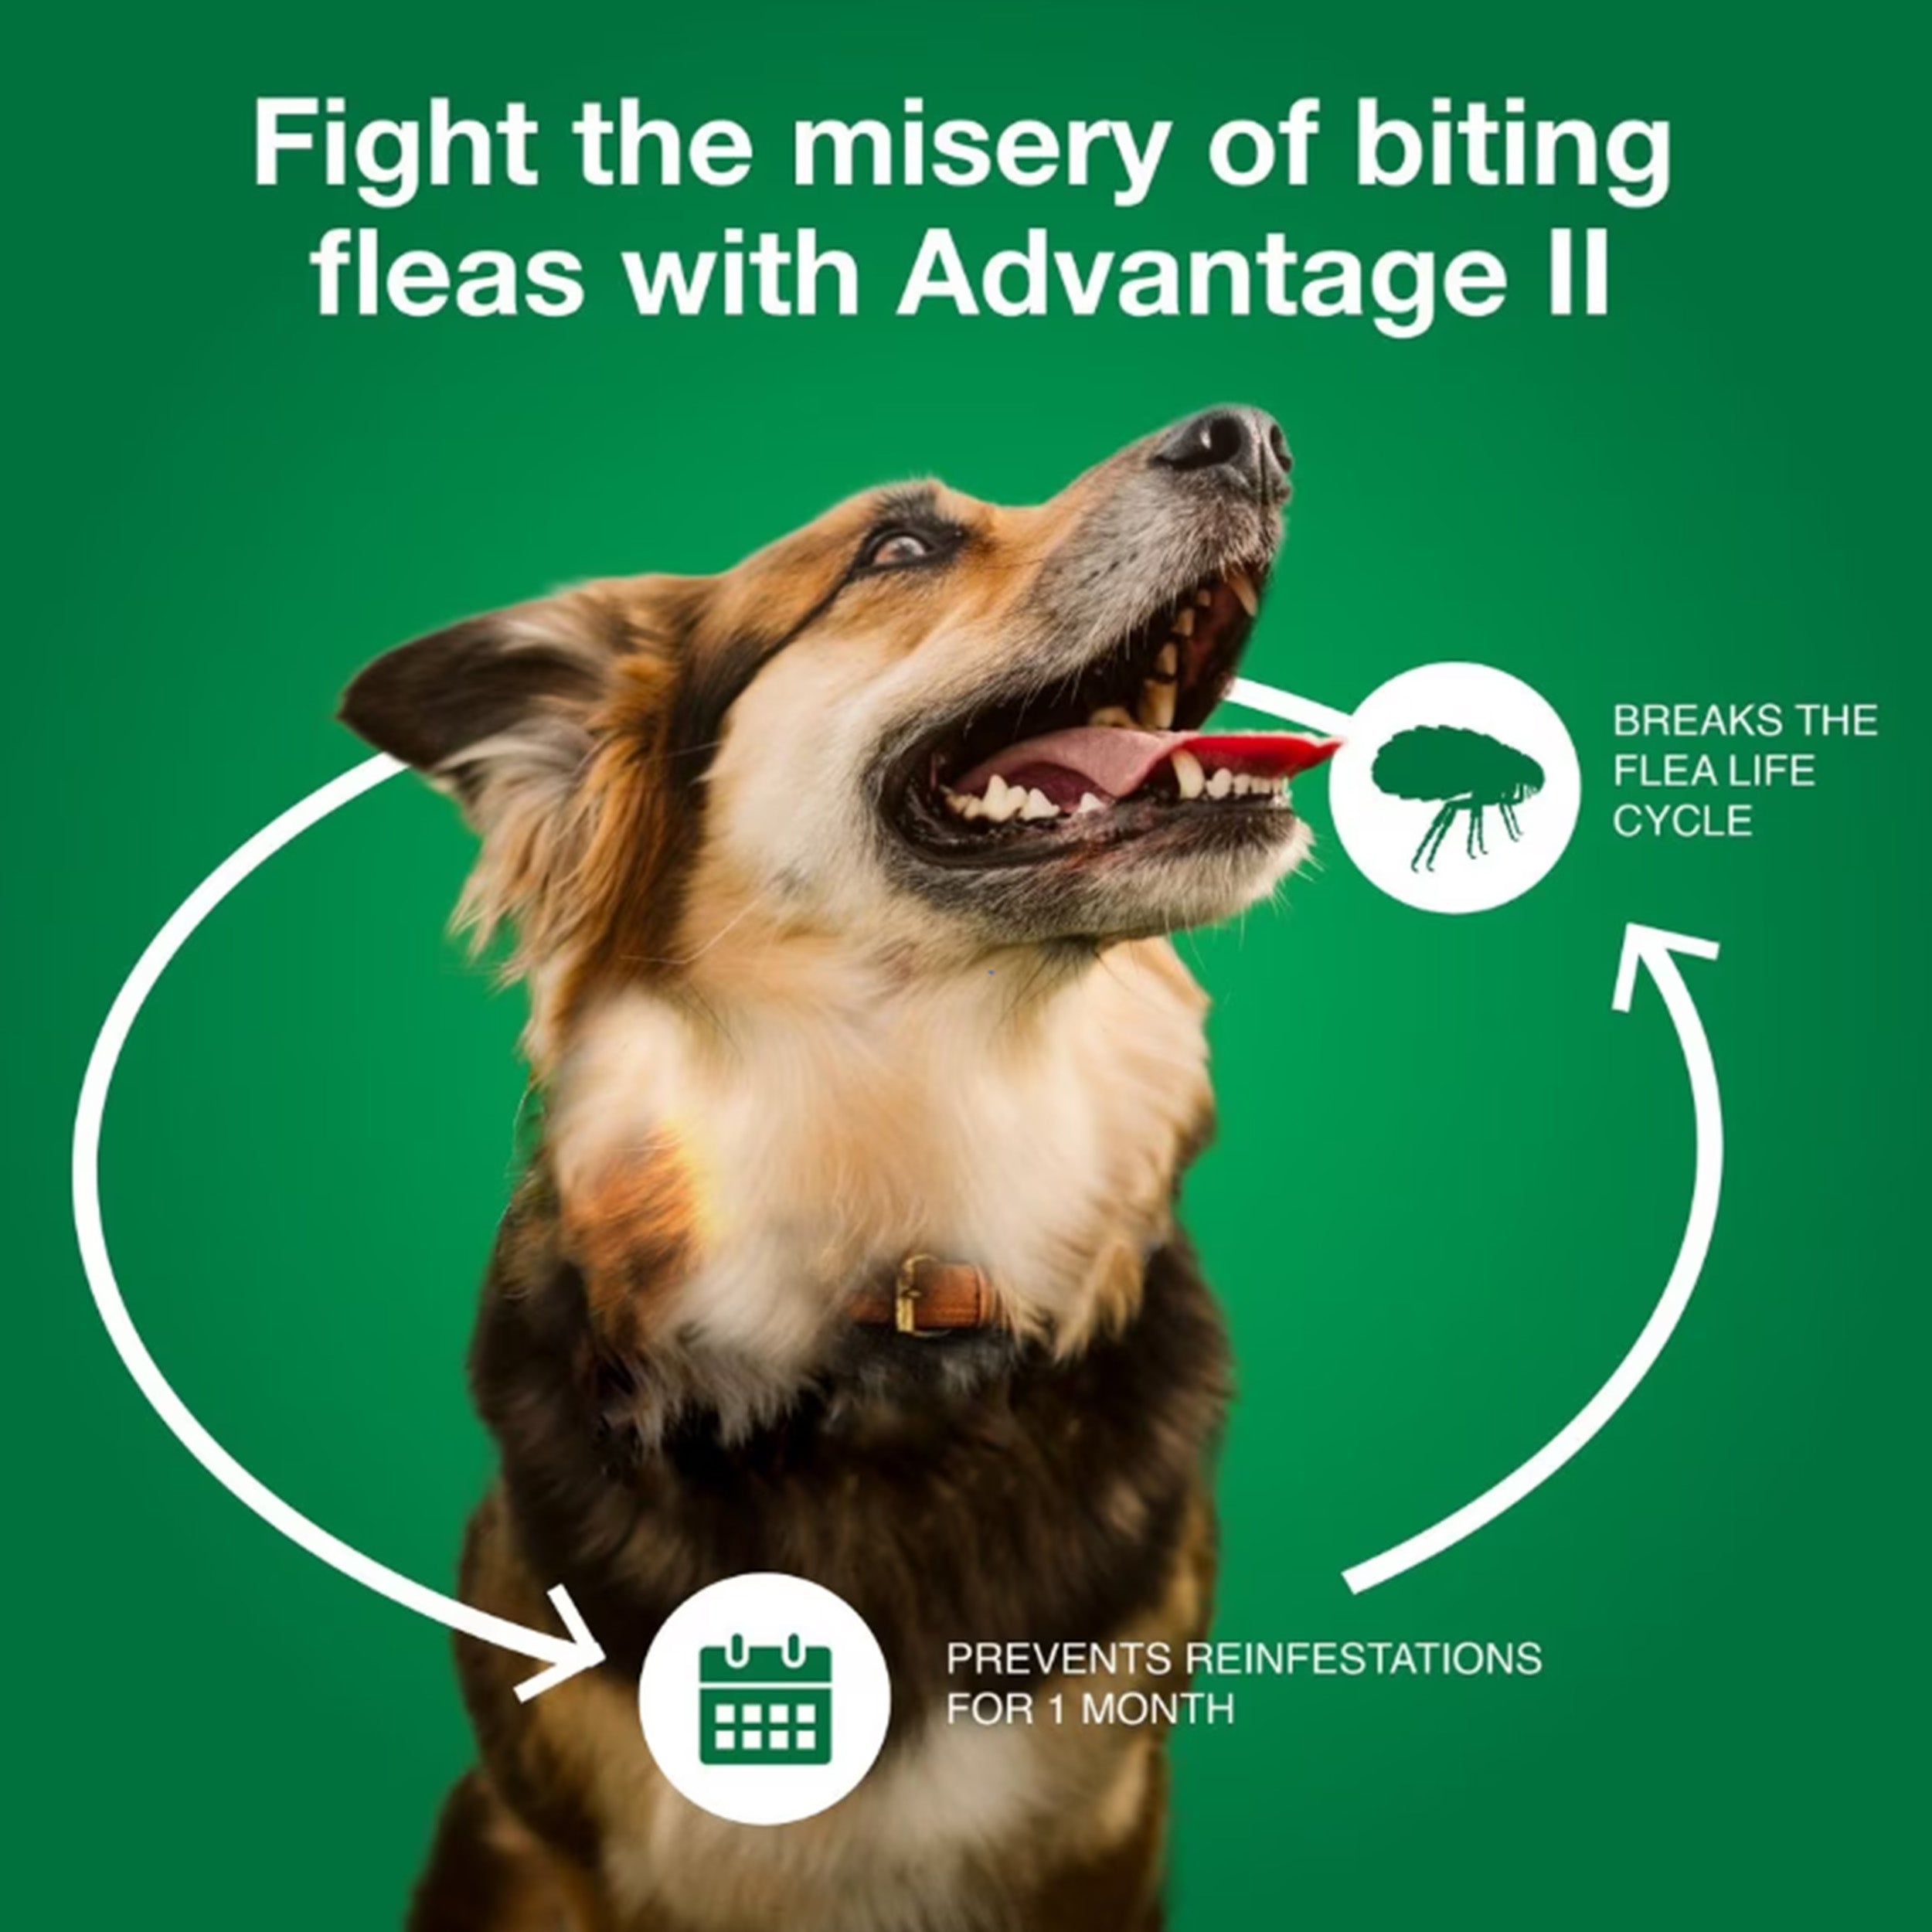 Advantage II Flea Treatment for Dogs, 21-55 lbs